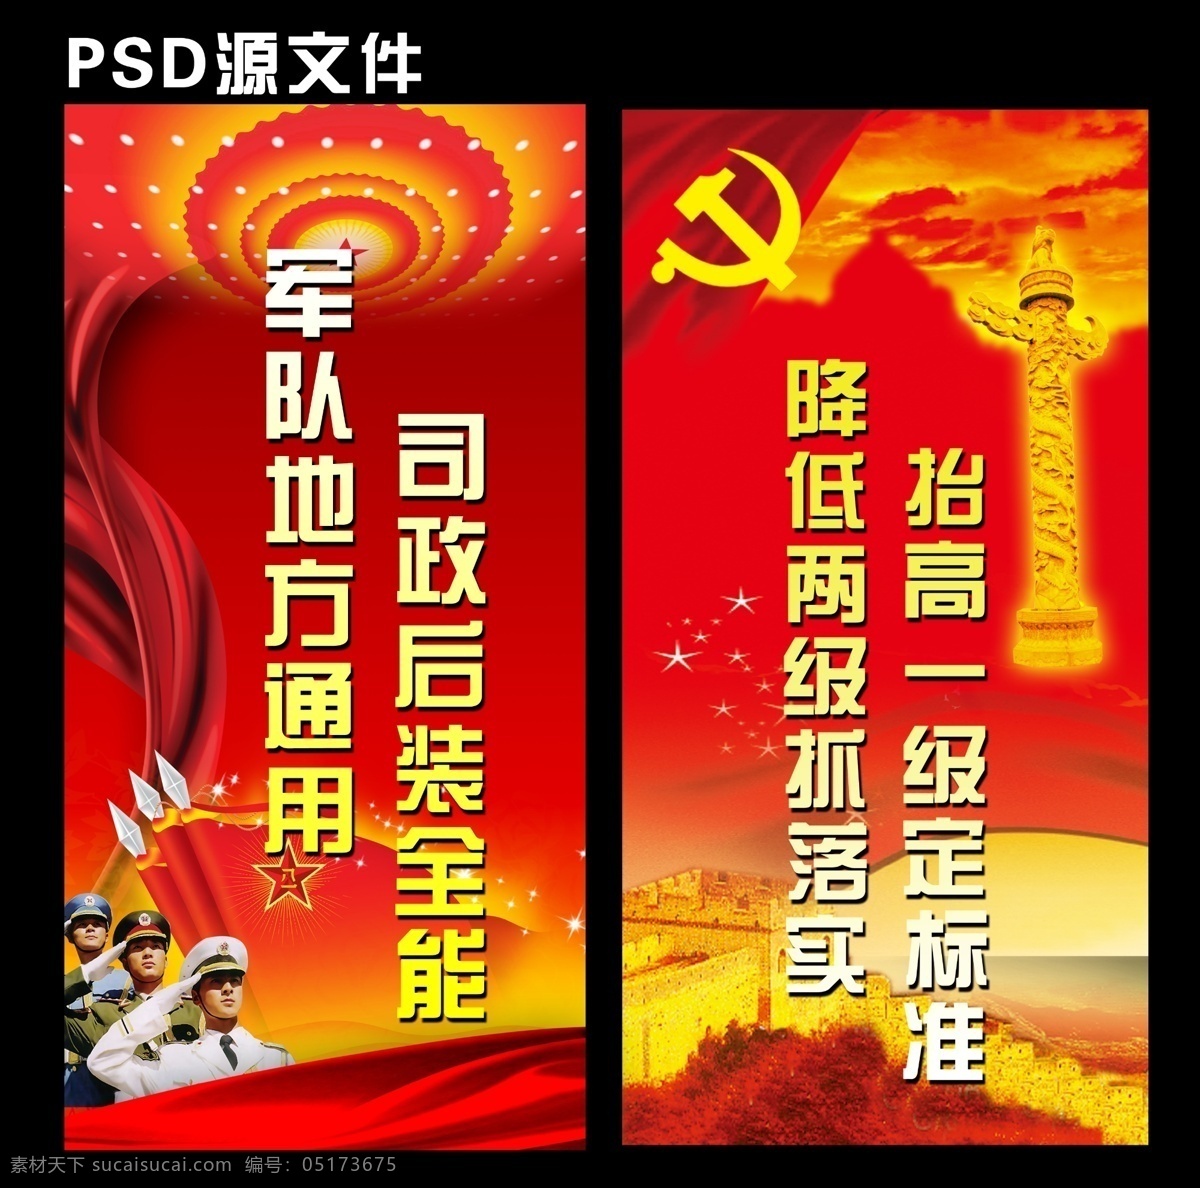 pop 部队标语 部队展板 党 共产党 广告设计模板 国庆 军队 军营文化 军人 党中央 海报 展板模板 源文件